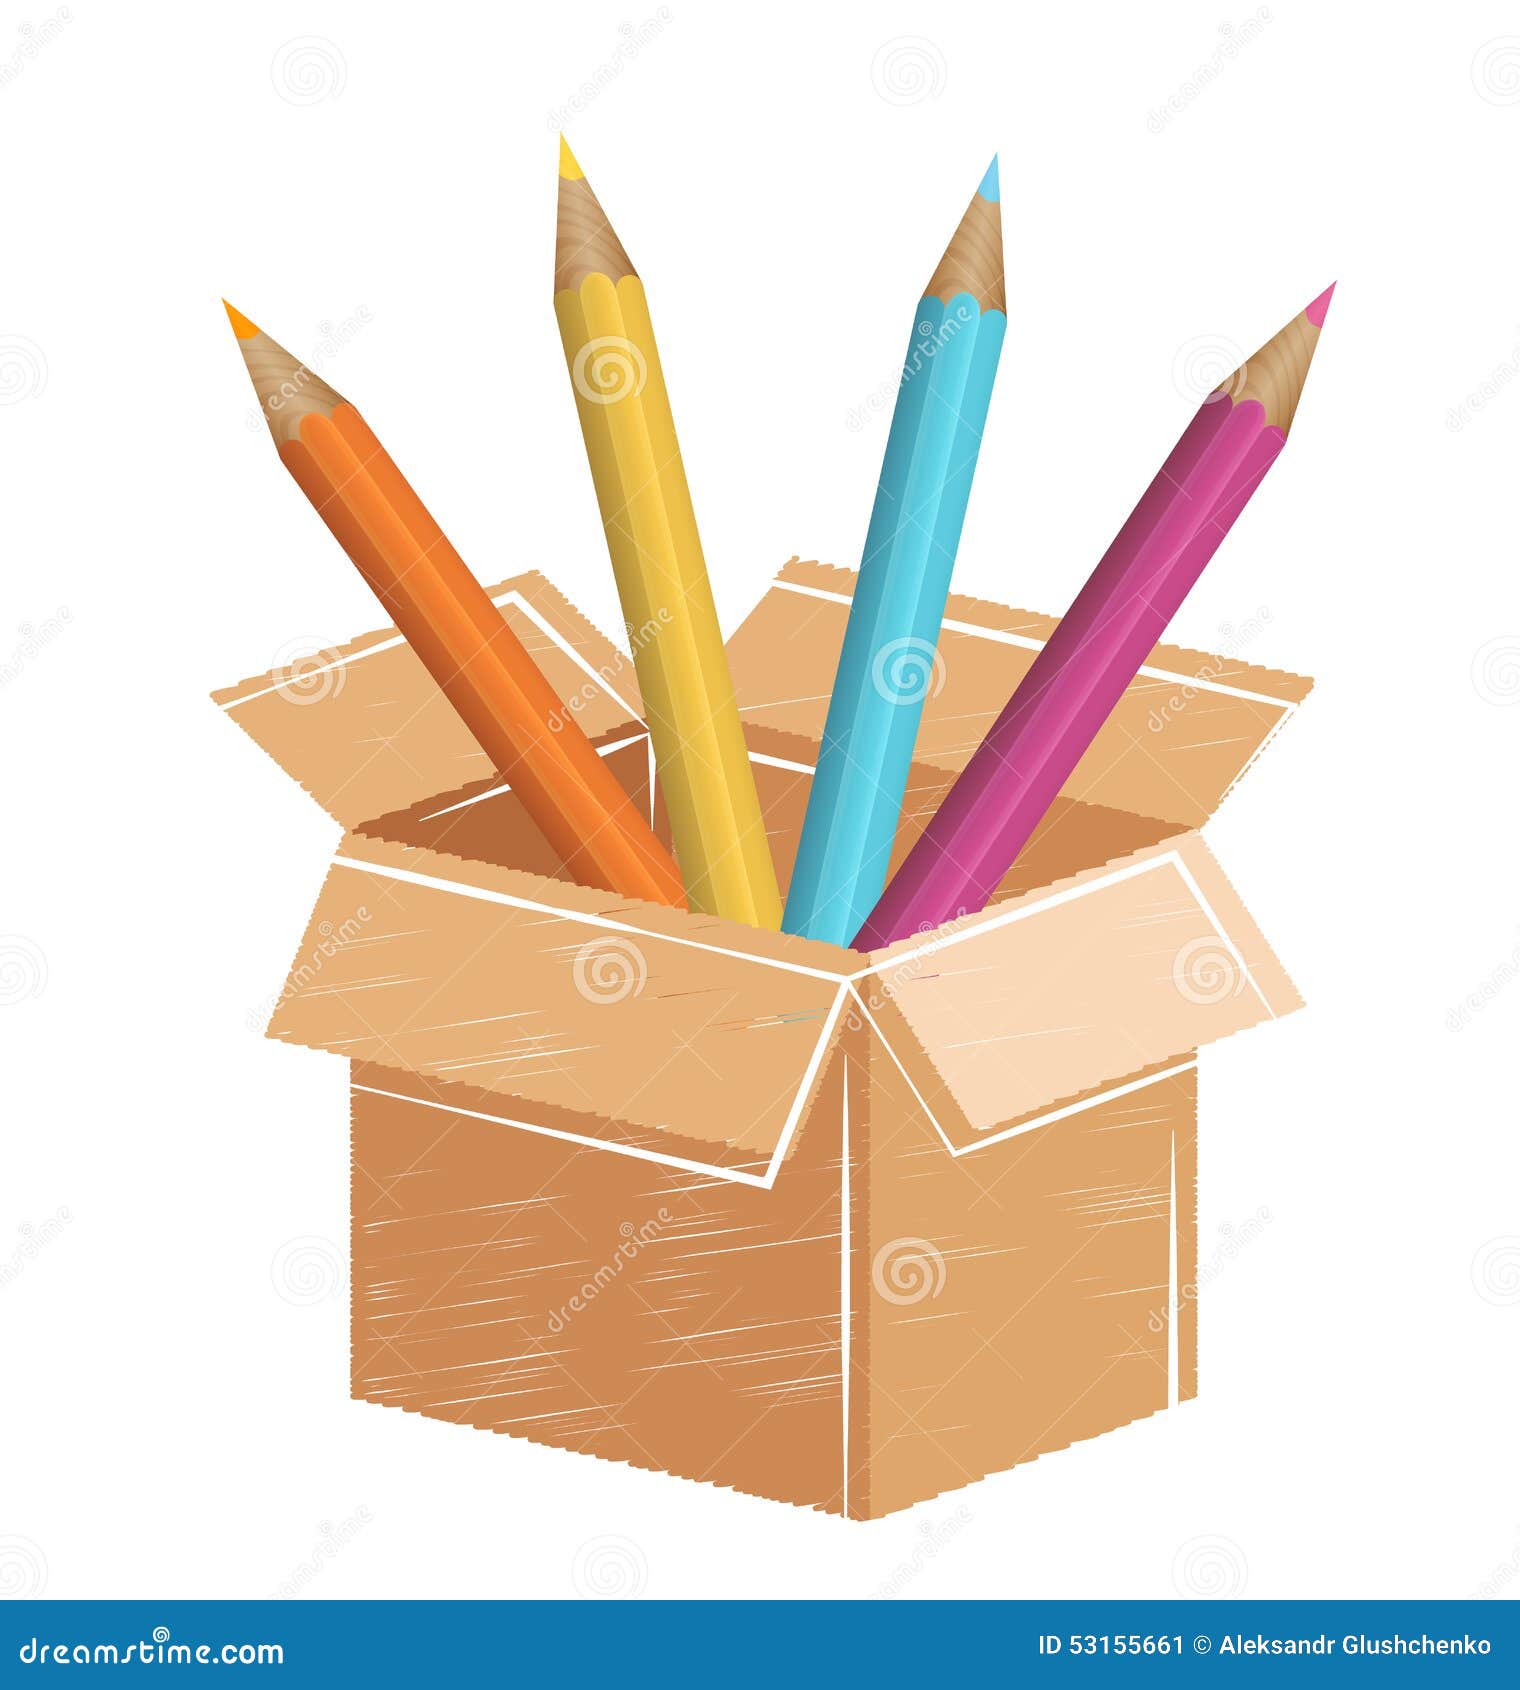 На столе лежат две коробки с карандашами. Коробка цветных карандашей. Карандаши для детей в коробке. Коробки с карандашами. Коробка с карандашами на прозрачном фоне.